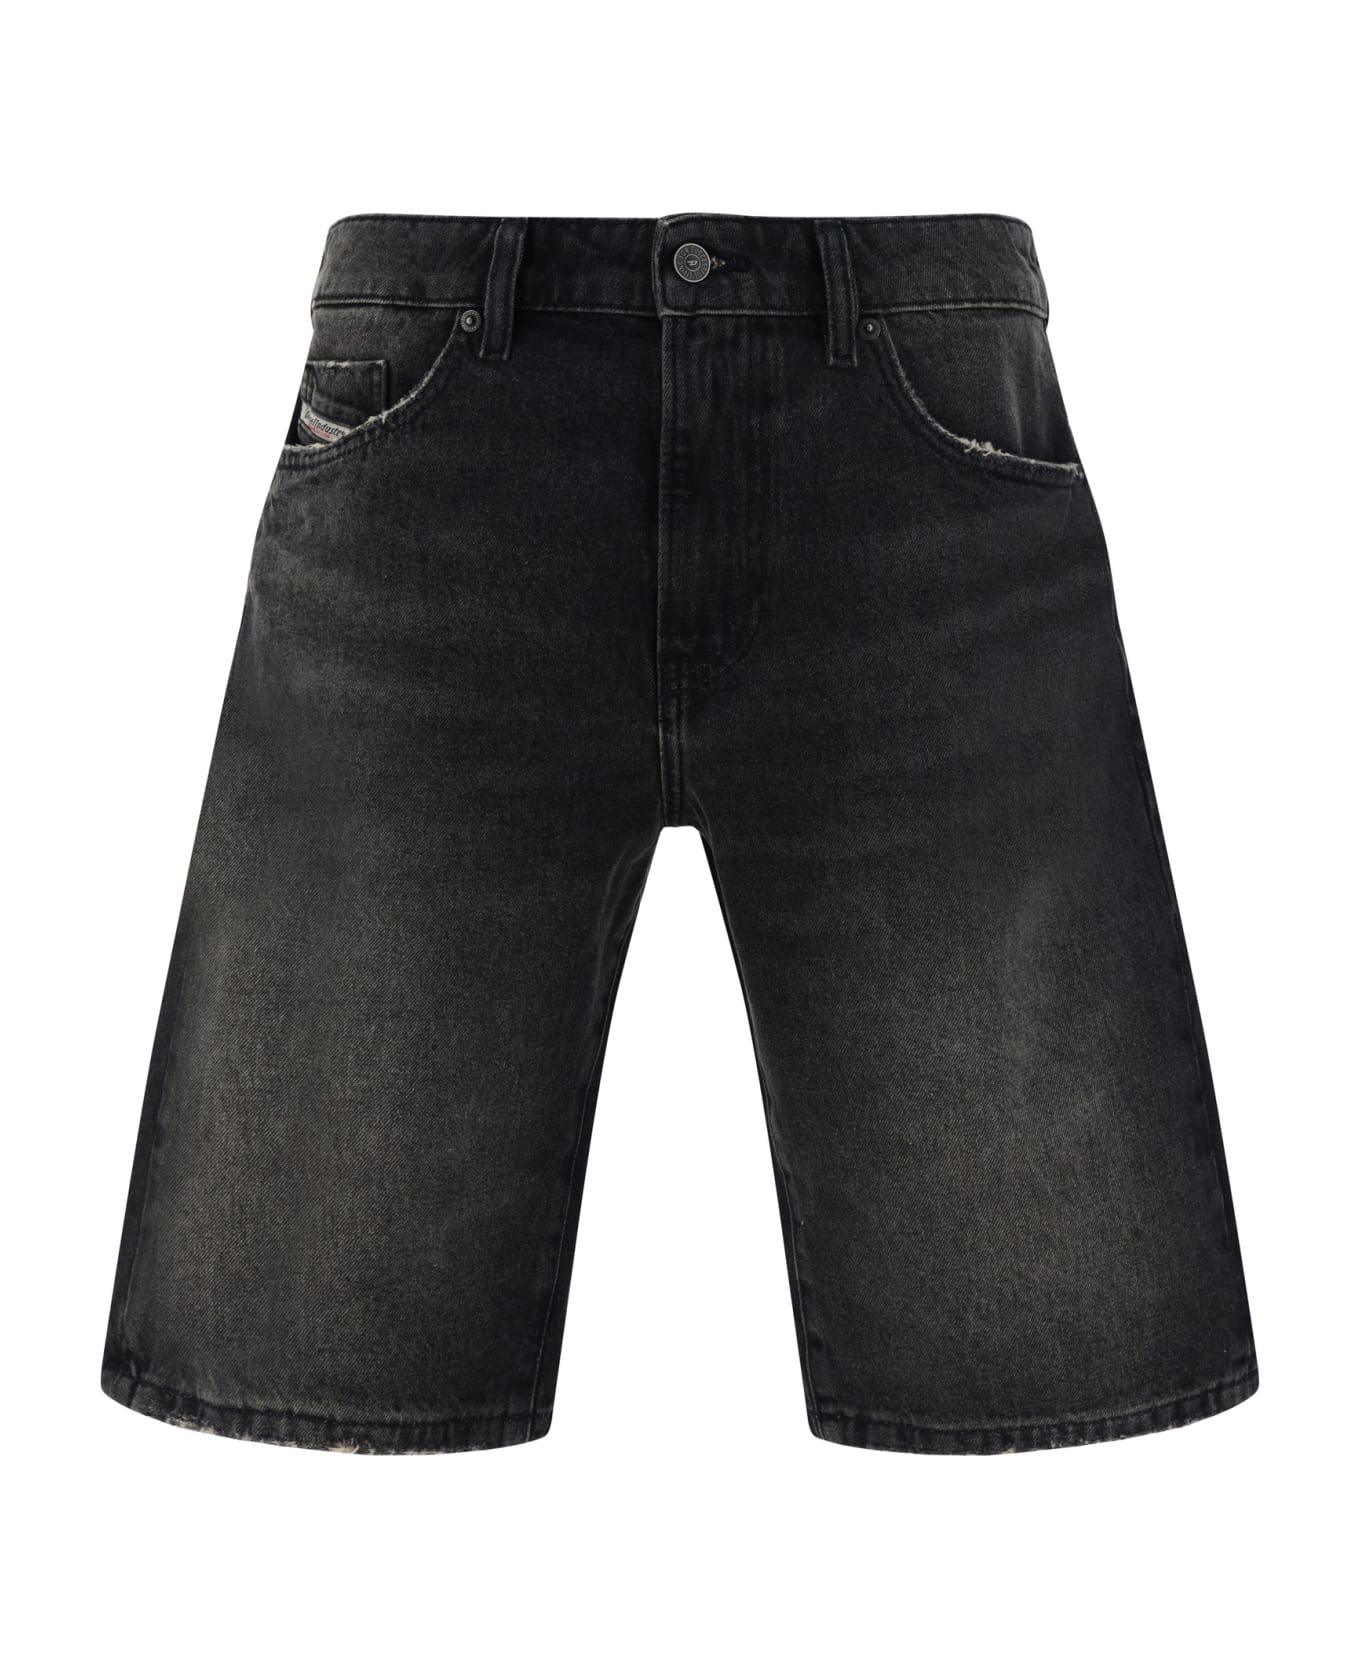 Diesel Denim Shorts - Black/denim ショートパンツ